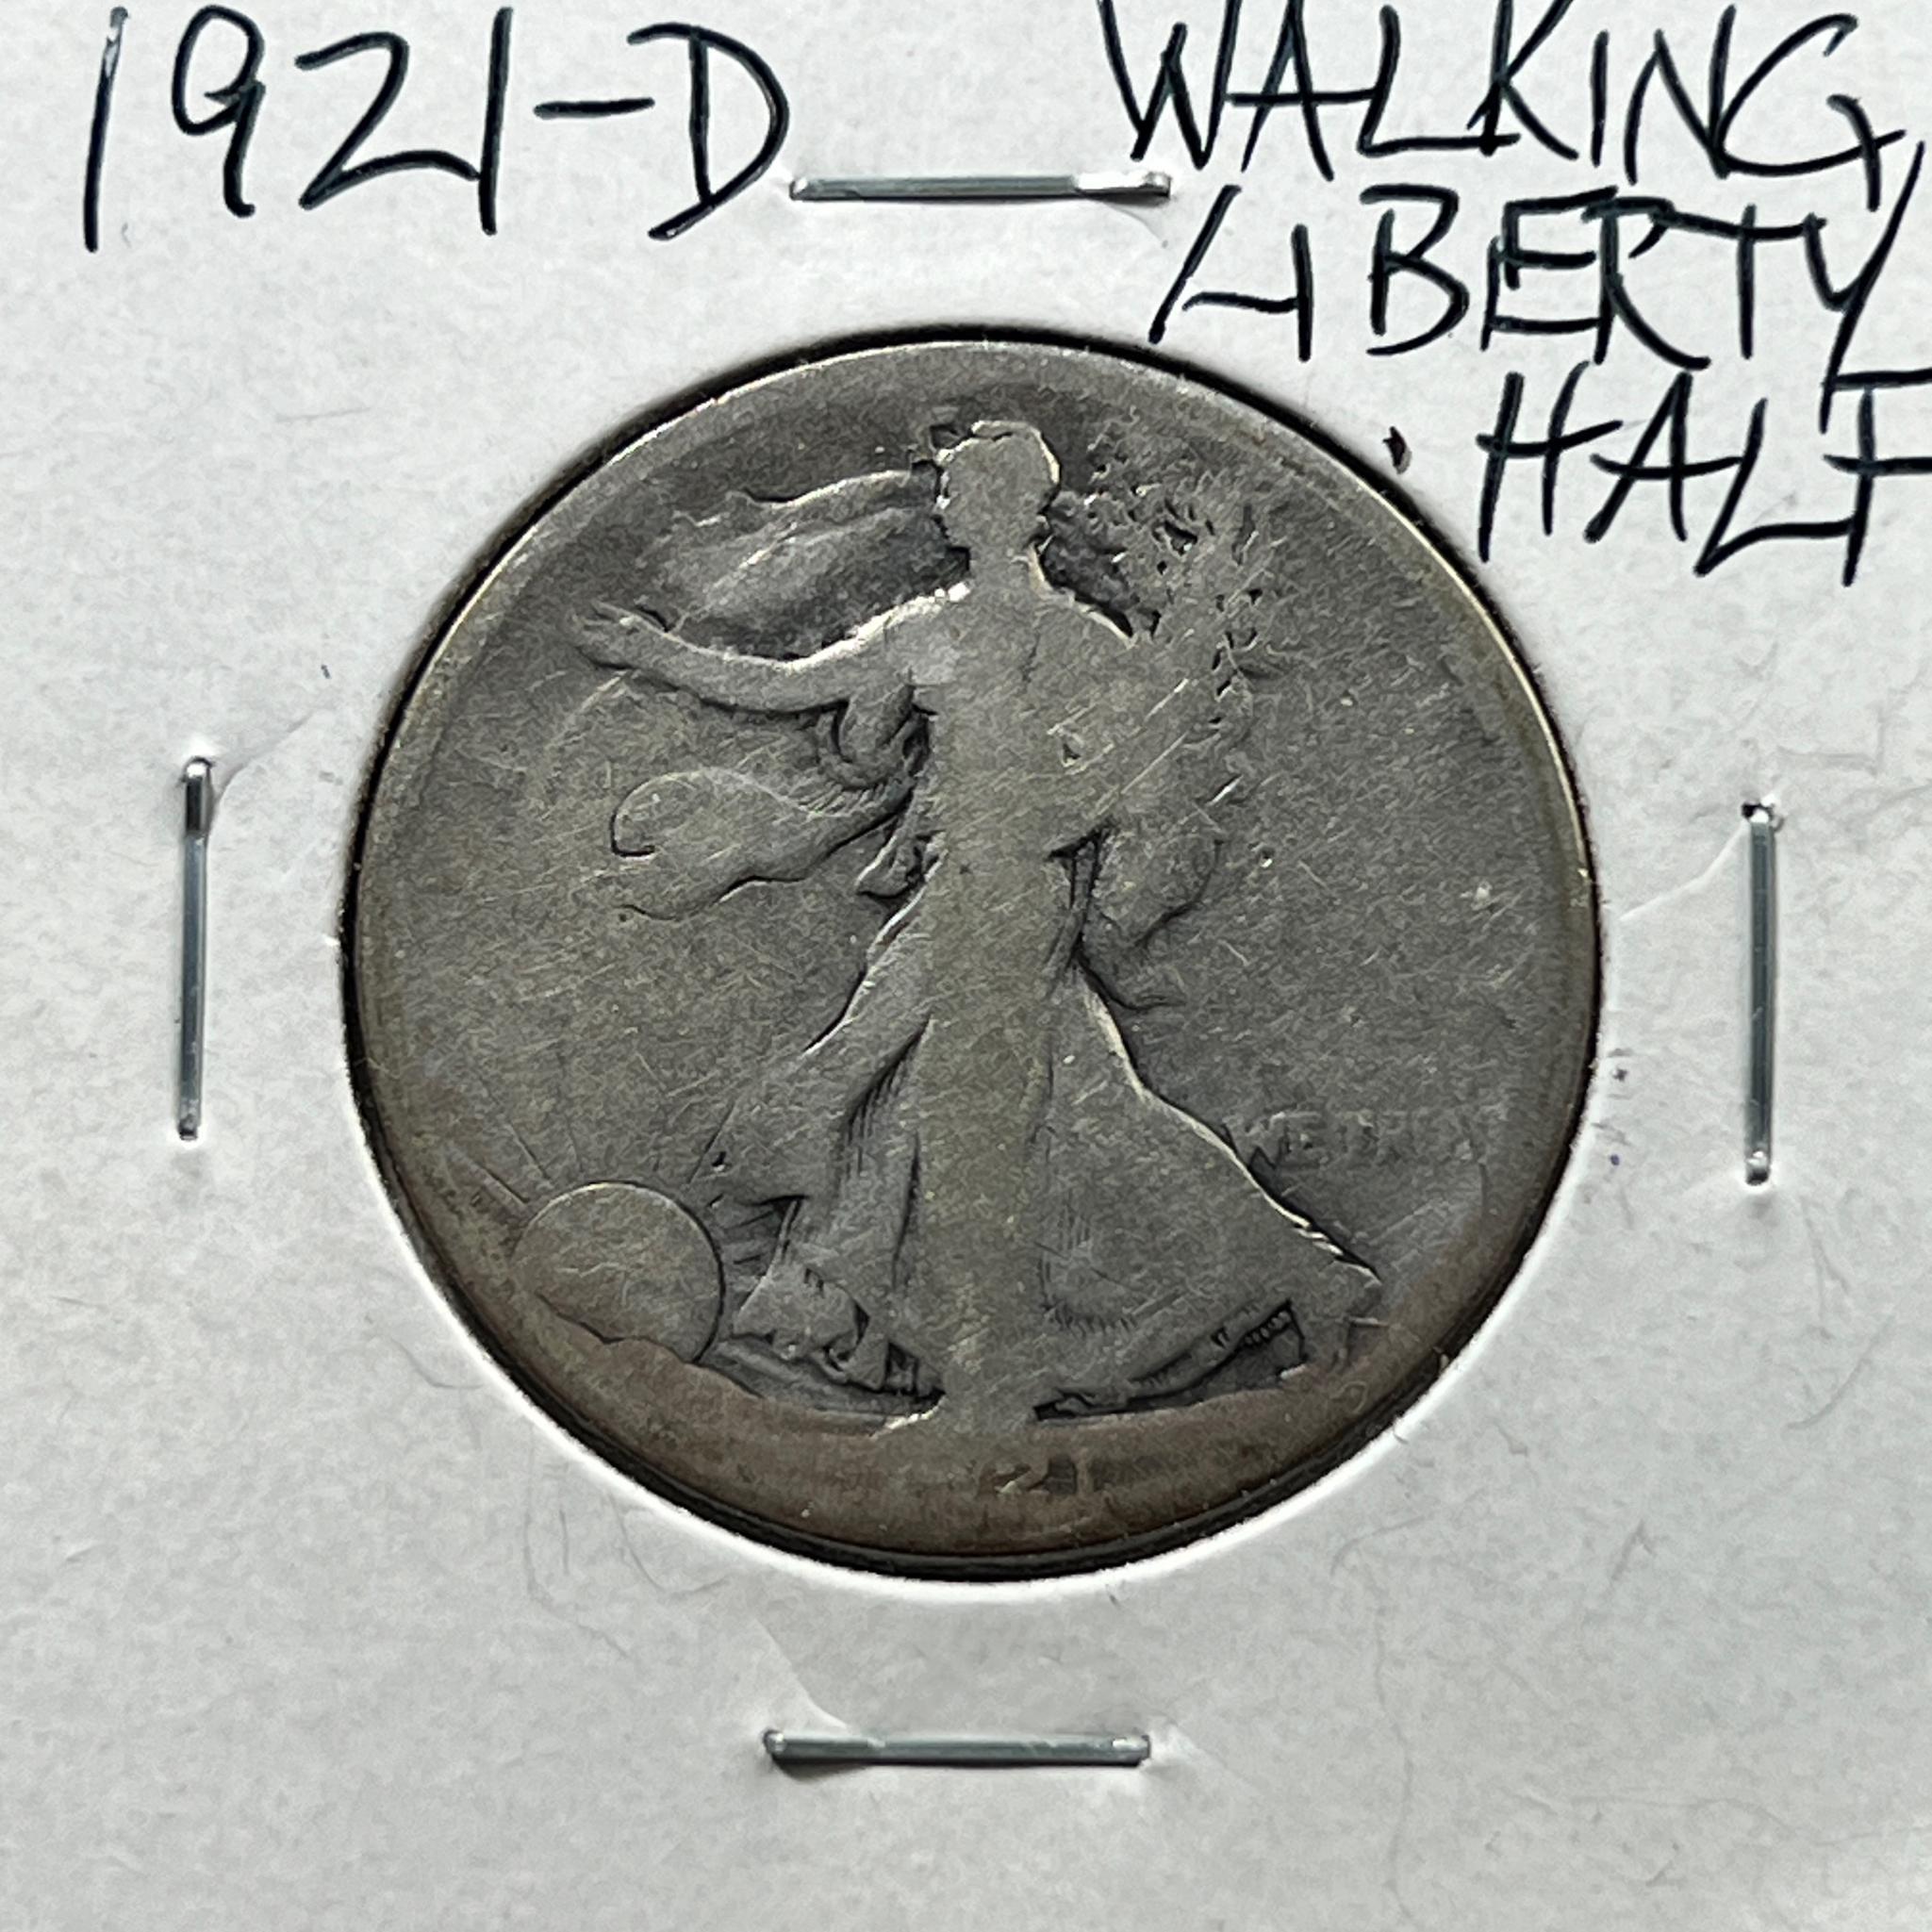 KEY DATE- 1921-D US Walking Liberty Half Dollar, 90% Silver